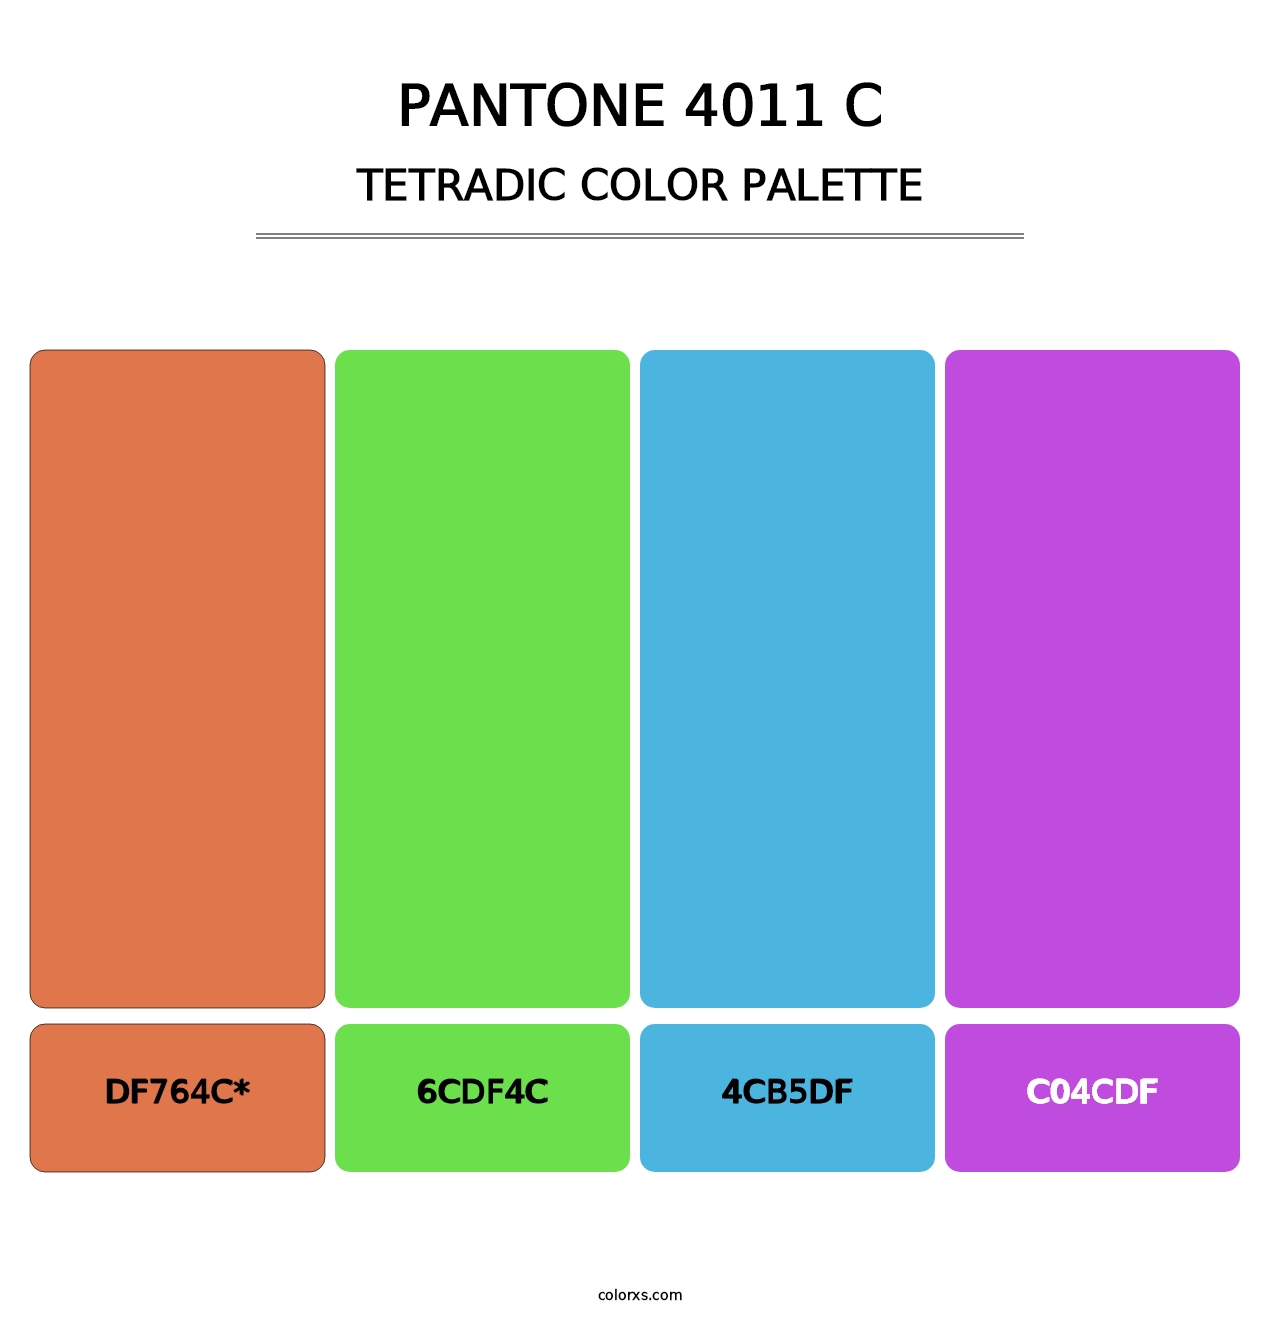 PANTONE 4011 C - Tetradic Color Palette